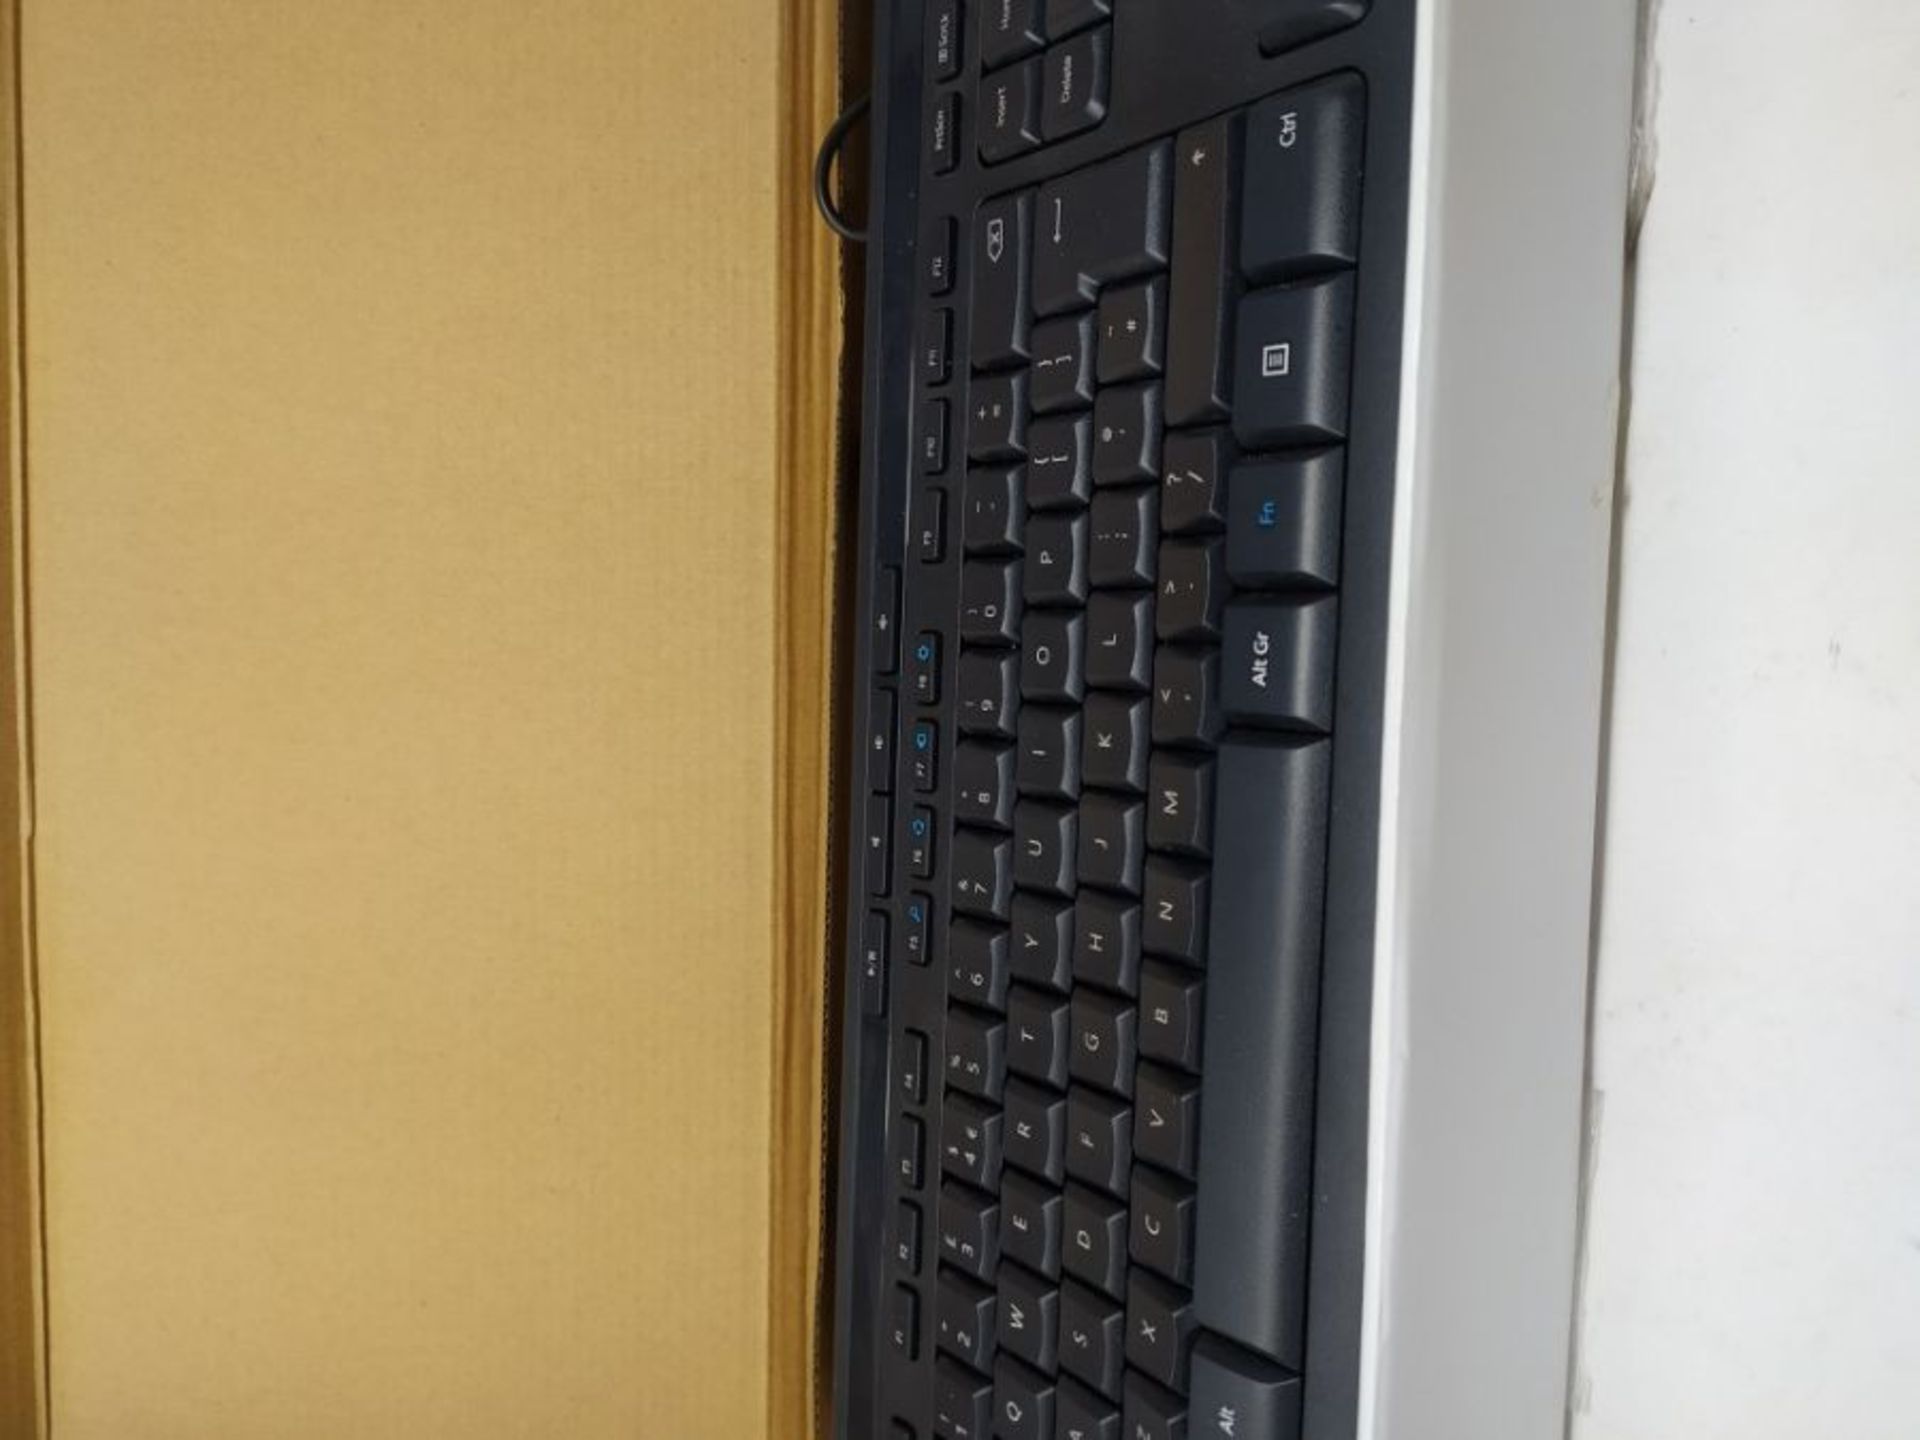 Microsoft Wired Desktop 600 for Business Keyboard - Black - Image 2 of 2